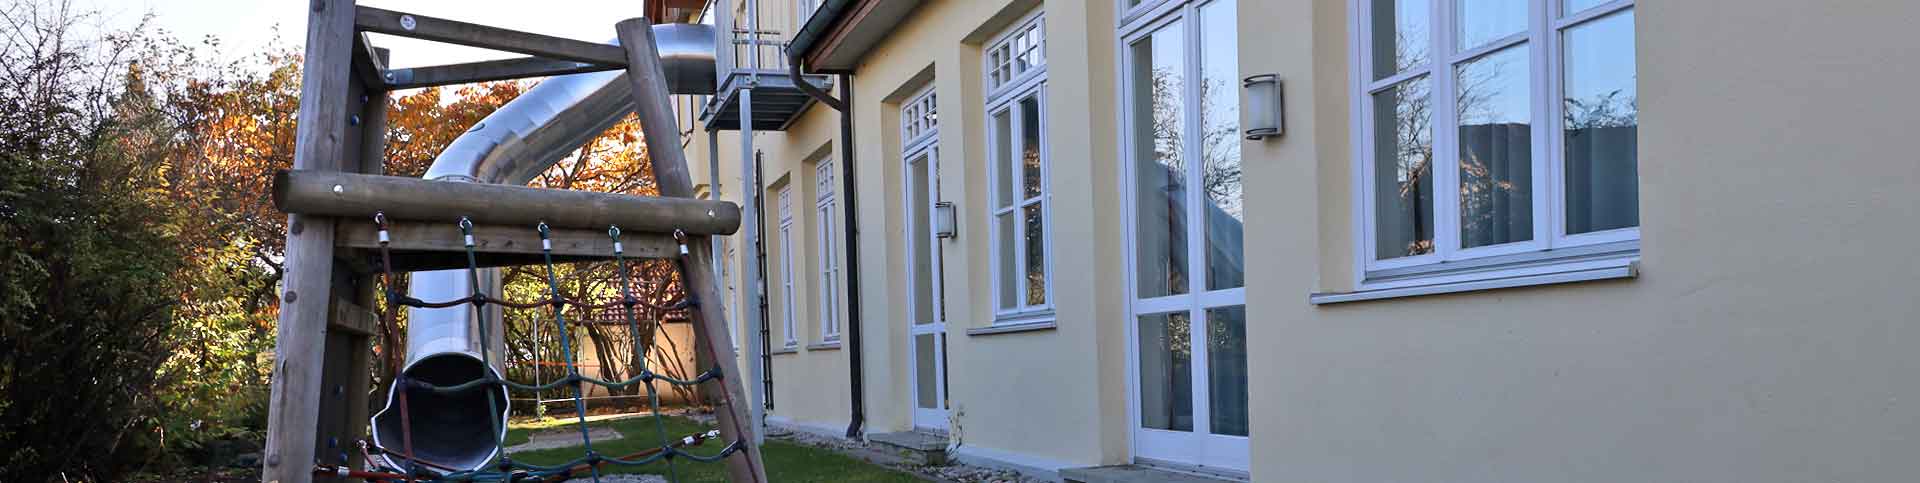 Rutsche aus Obergeschos an der Hausfassade, davor Klettergerüst